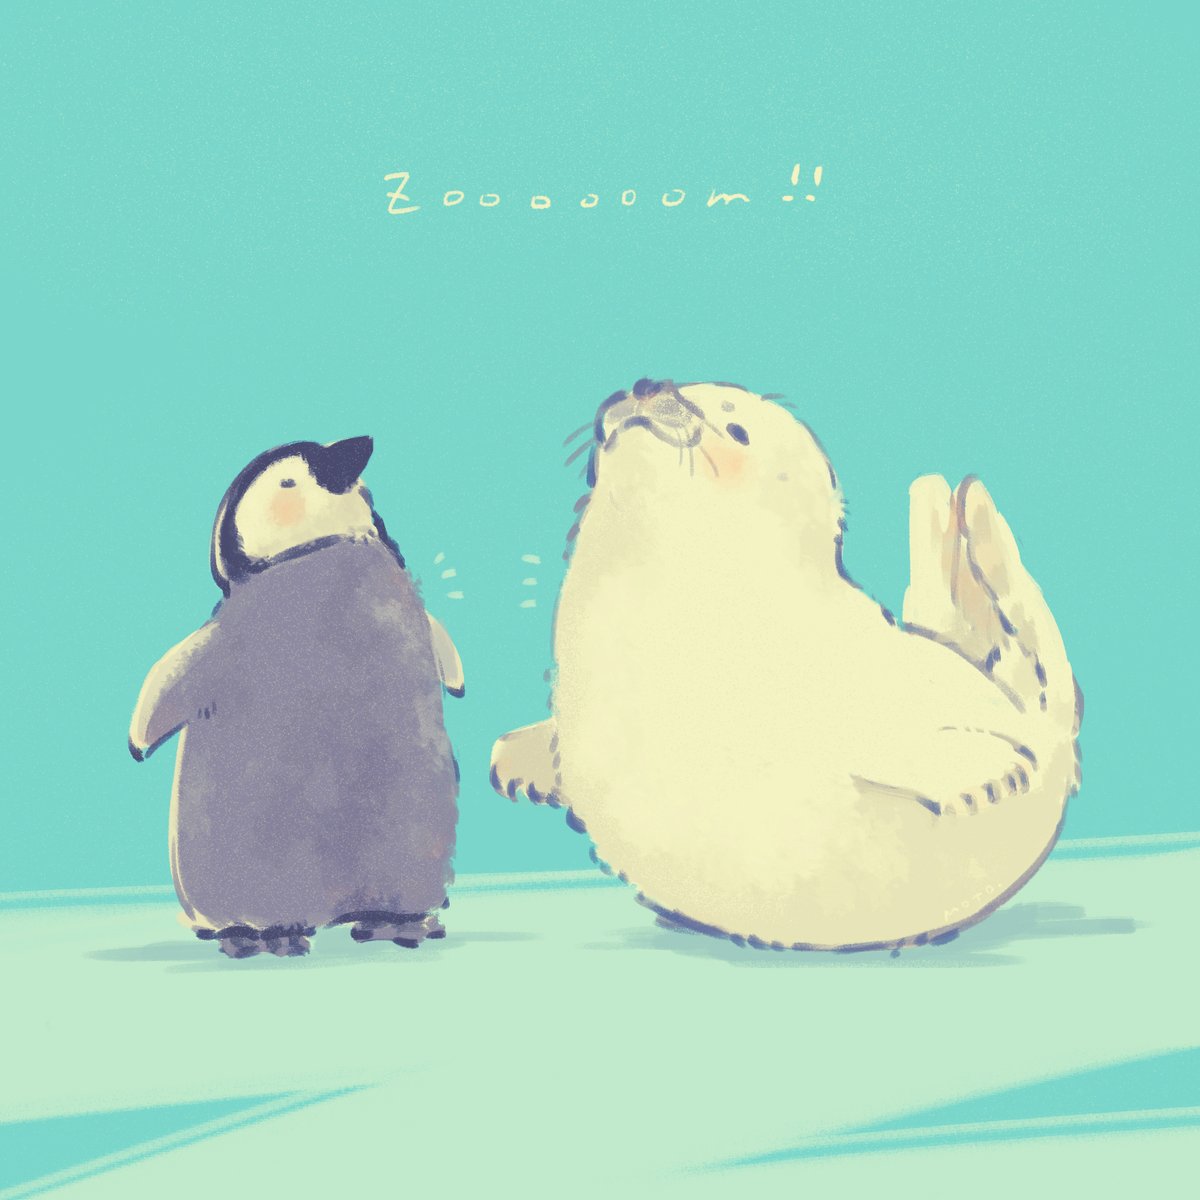 zoooooom!!✈️🐧🦭
#アザラシ #ペンギン #seal #penguin #ゆるいイラスト